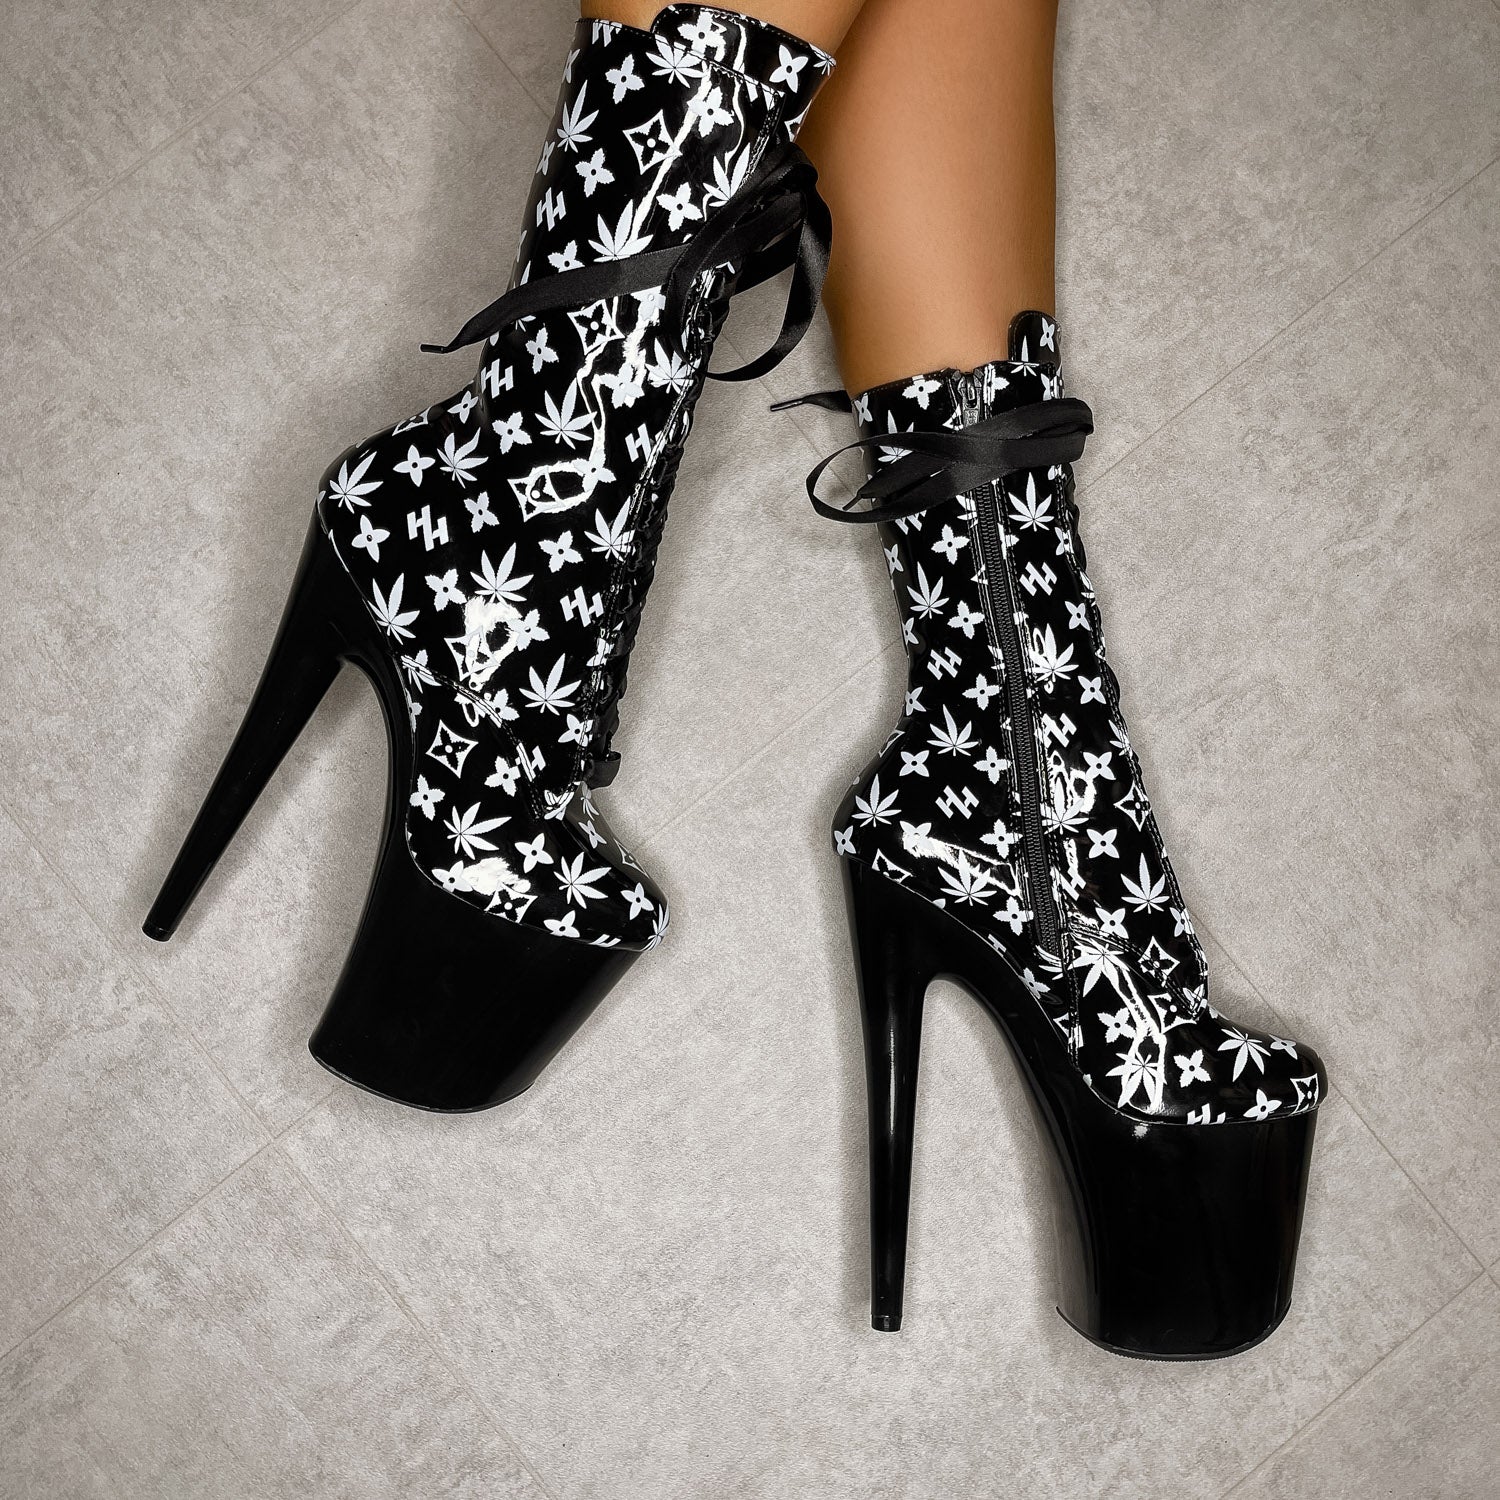 Branded Boot - Black/Black - 8 INCH, stripper shoe, stripper heel, pole heel, not a pleaser, platform, dancer, pole dance, floor work